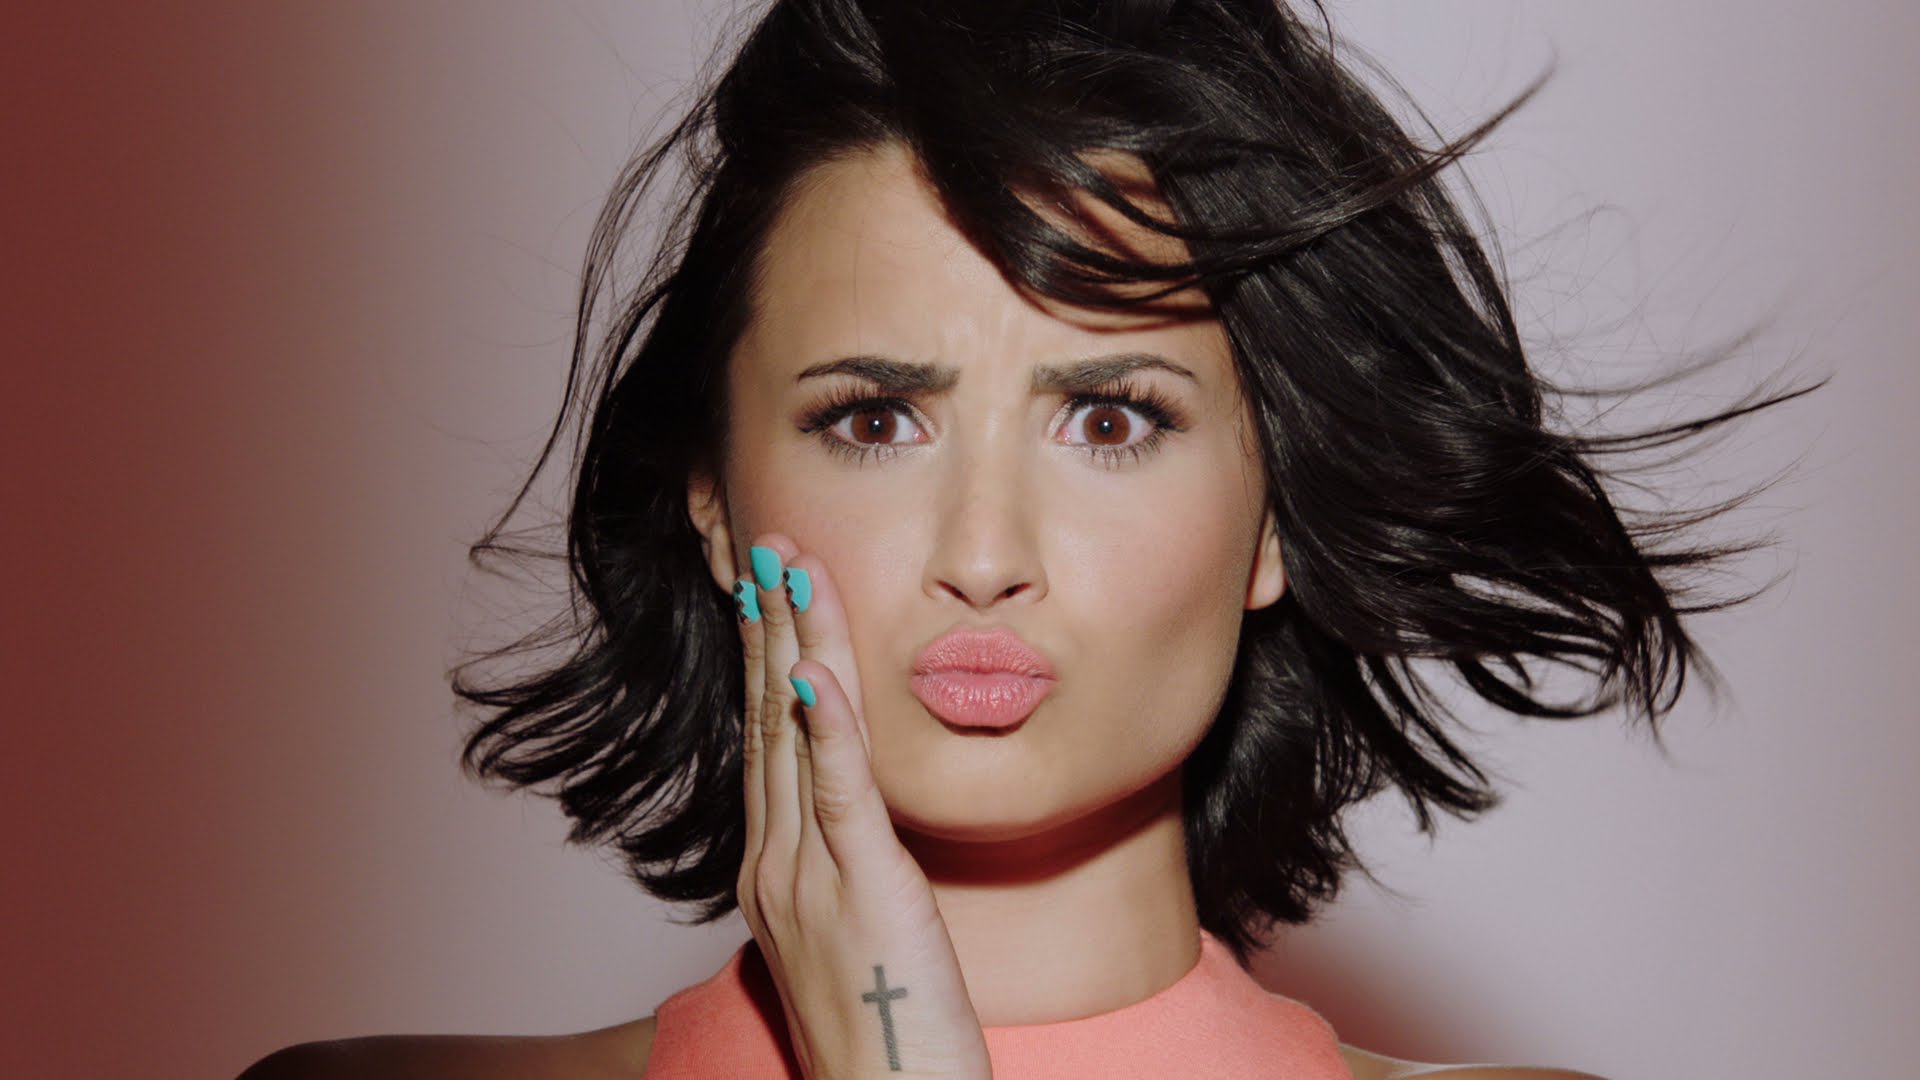 Demi Lovato, Wiz Khalifa y Paris Hilton festejan en el vídeo de “Sorry not Sorry”